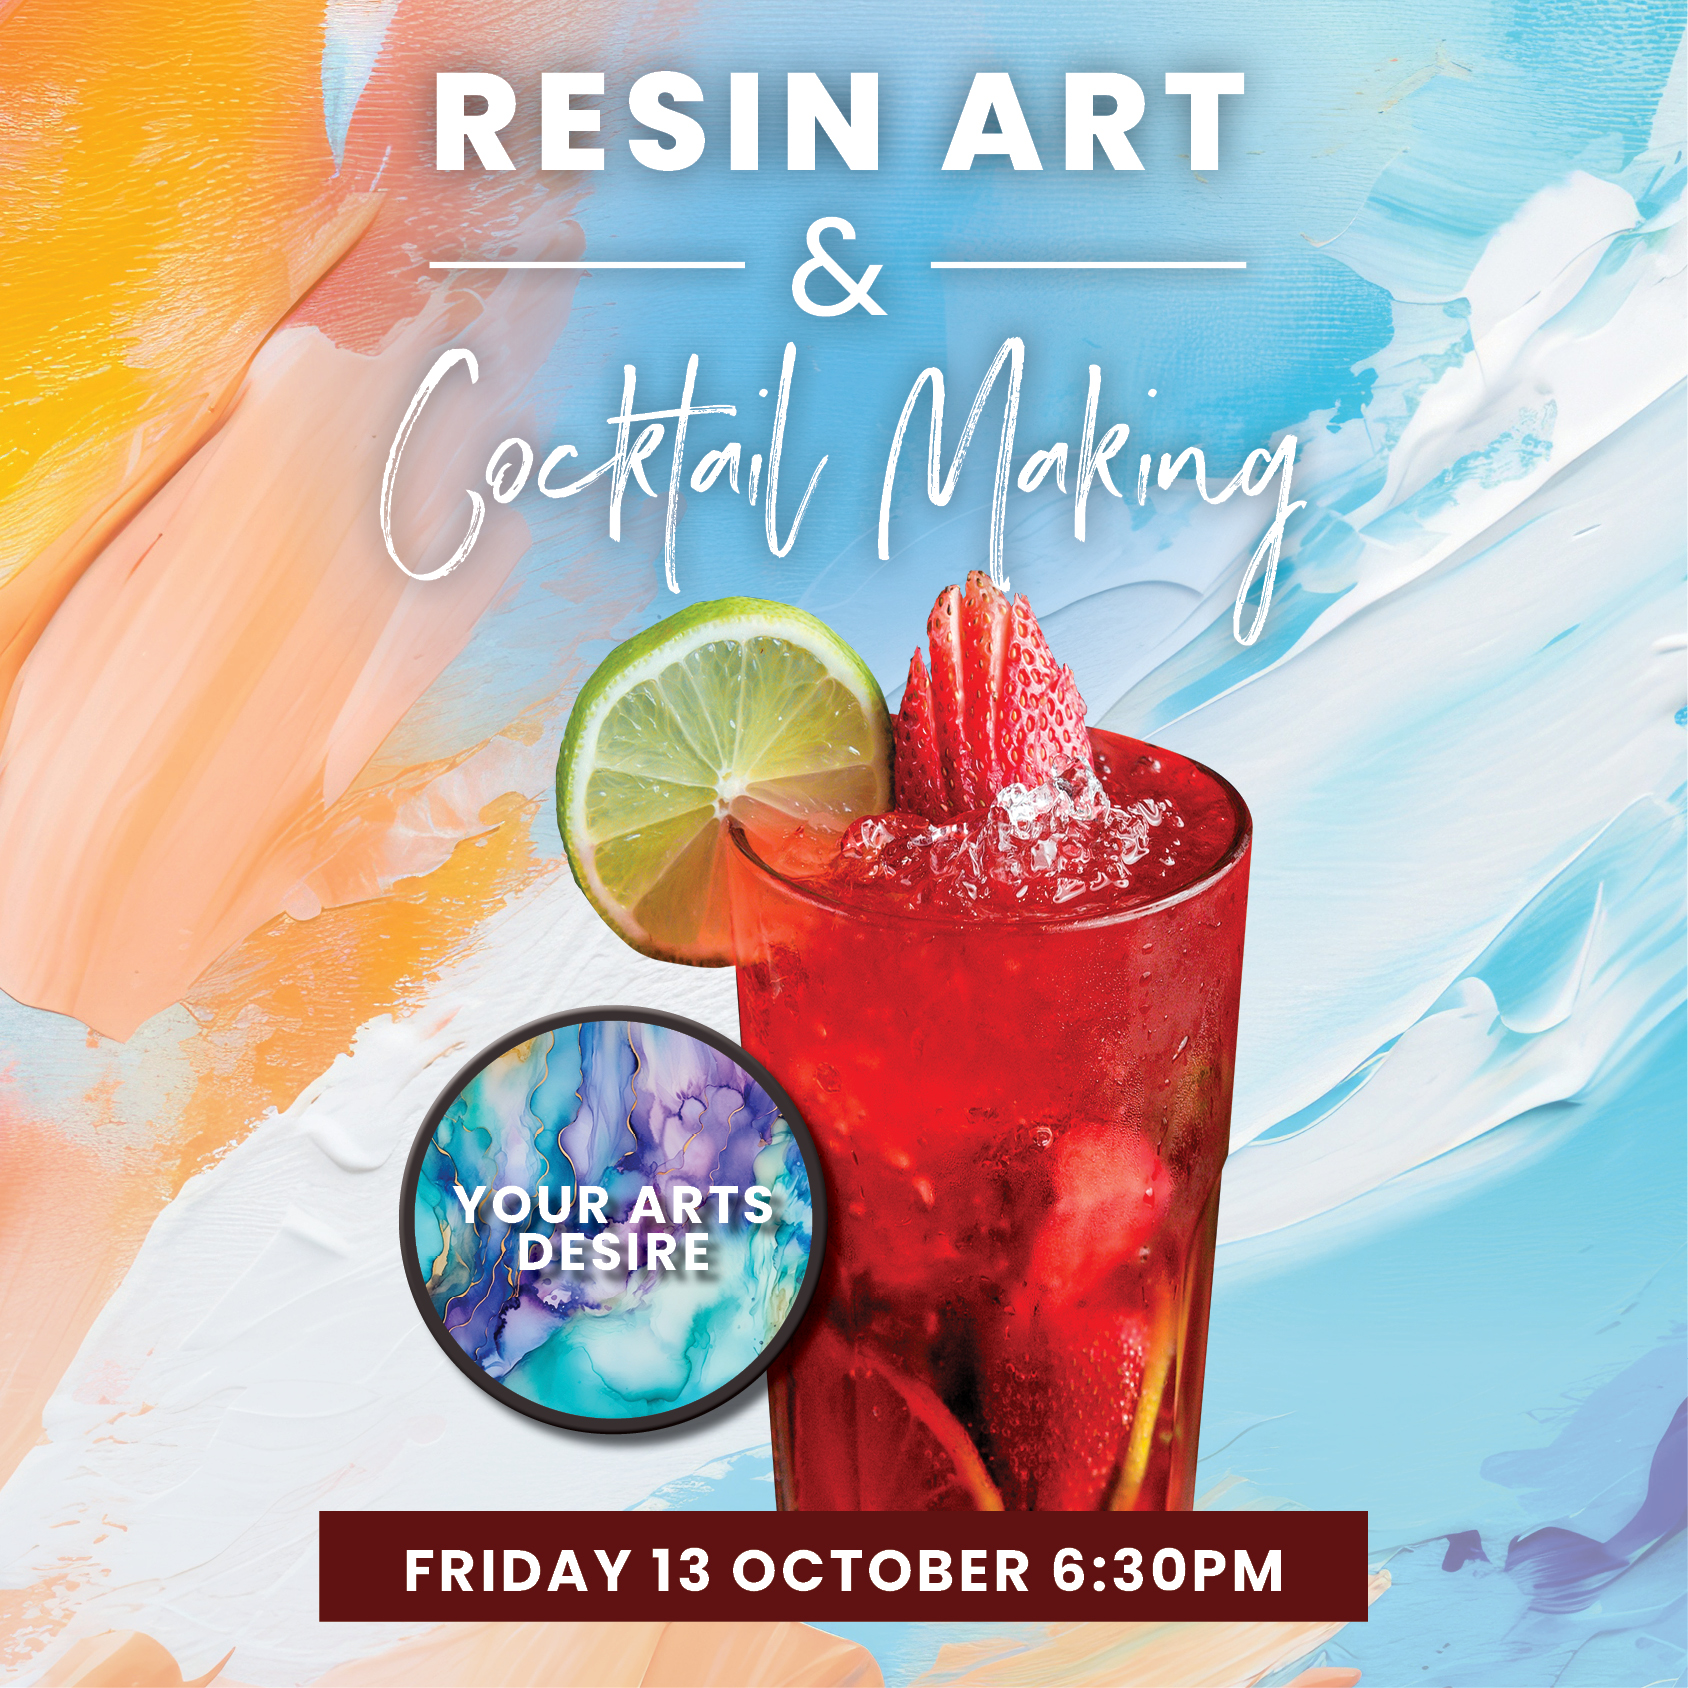 Oct Resin Art Cocktail Making - Social SQ - ICCP Group Menai